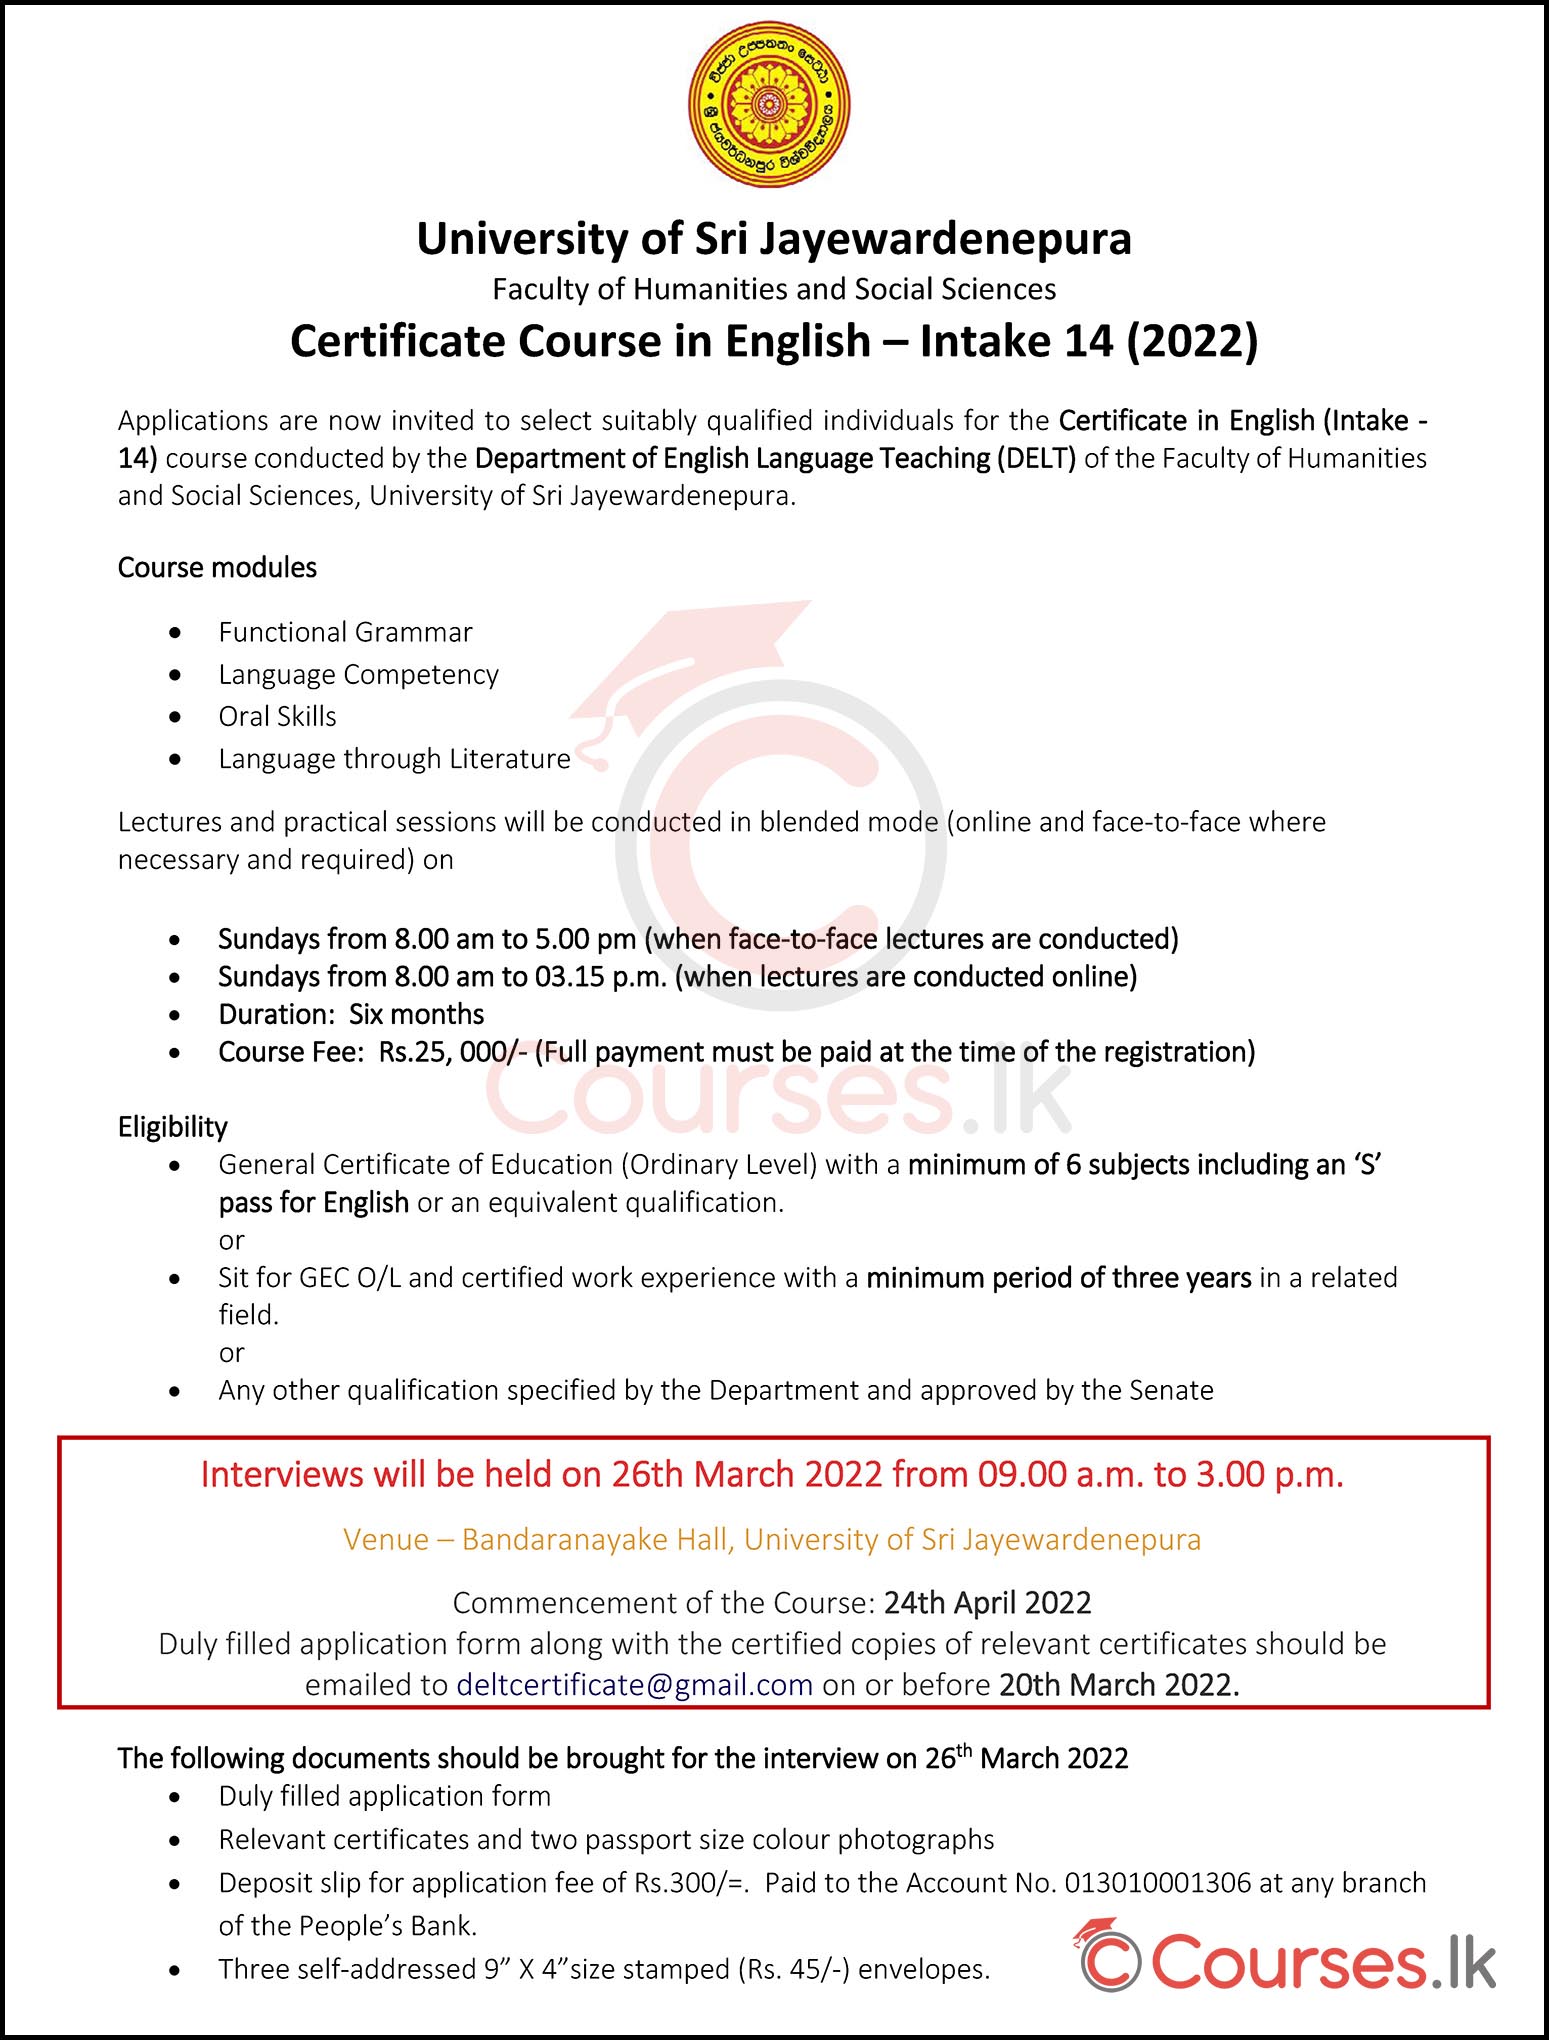 Certificate Course in English Language 2022 - University of Sri Jayewardenepura